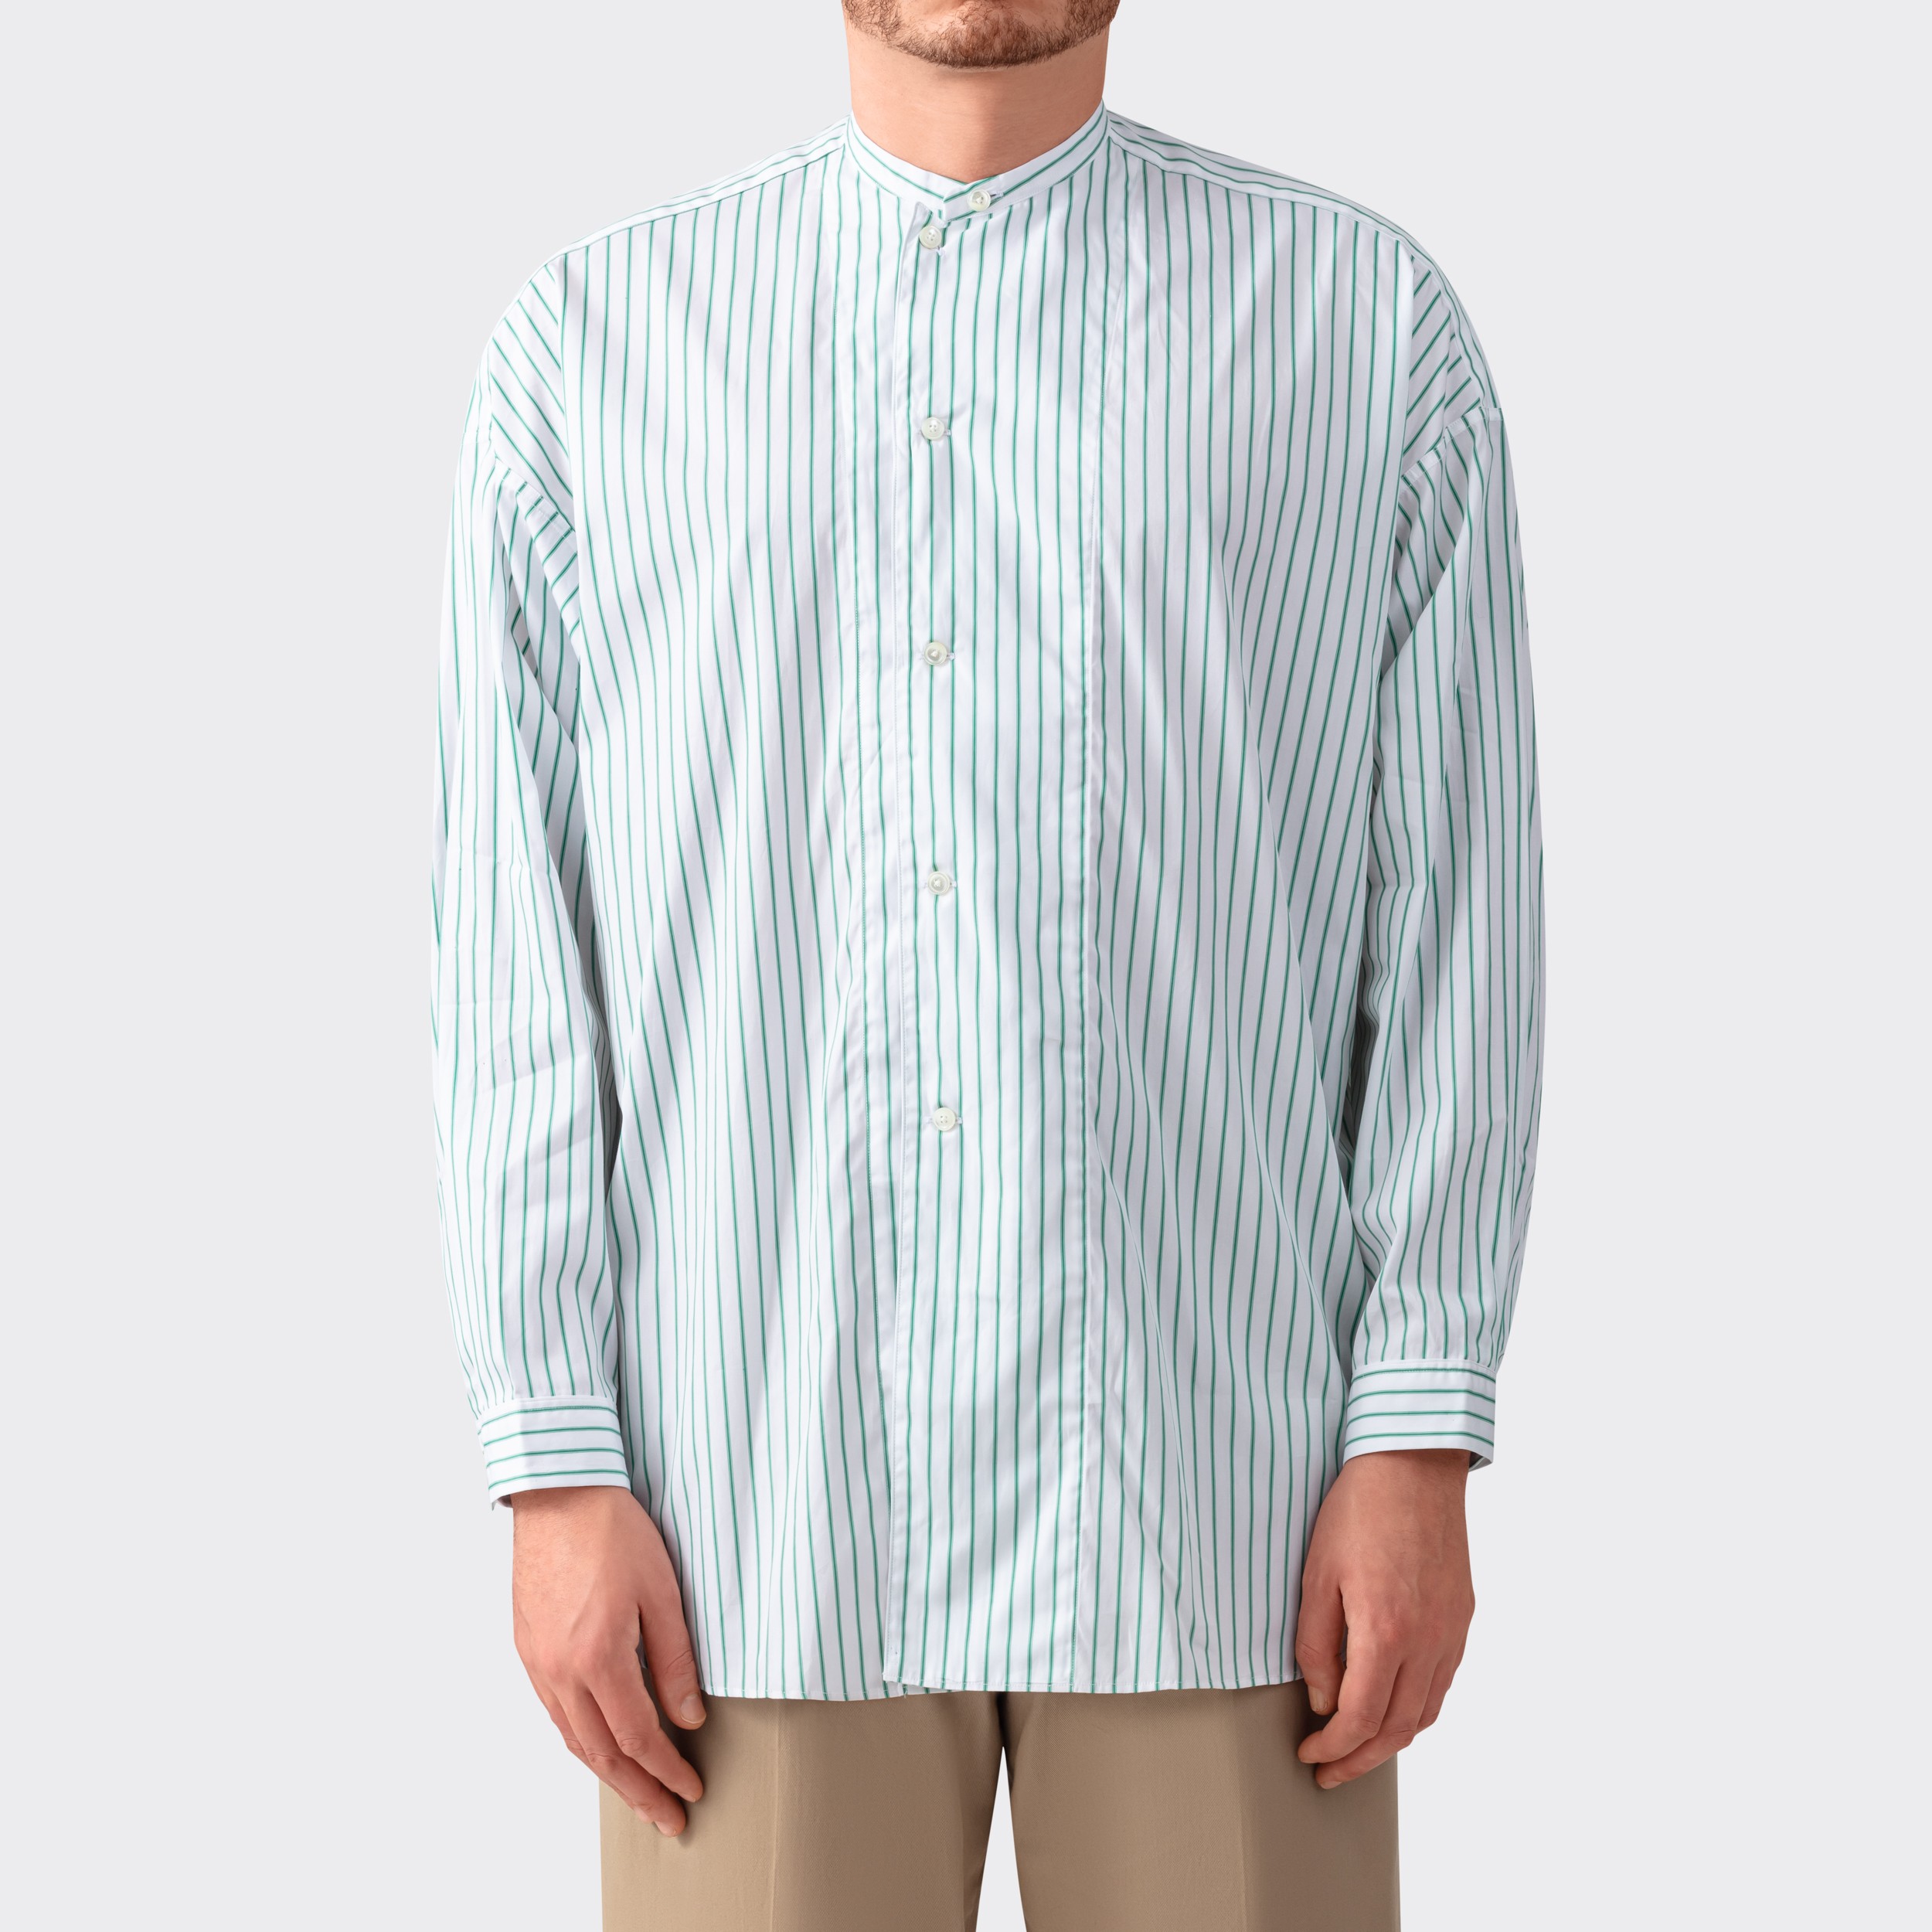 Haversack : Stripes Band Collar Shirt : White/Green